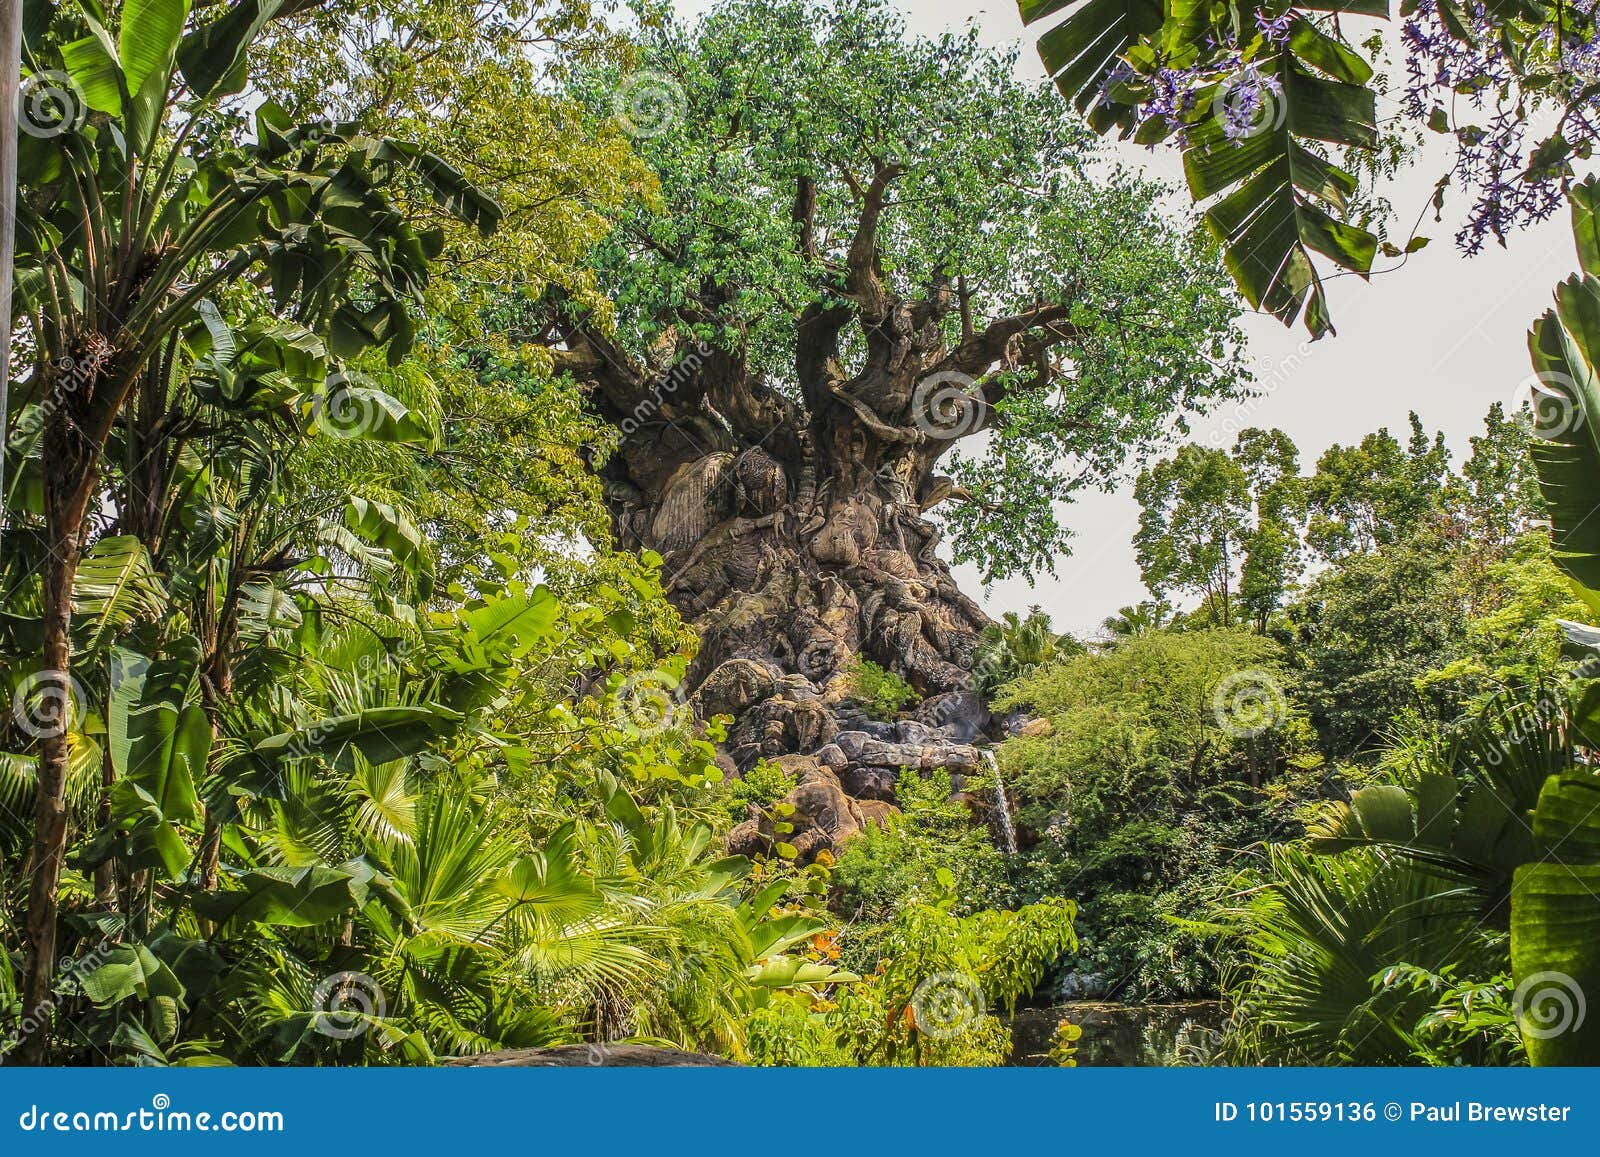 Download Disney Animal Kingdom Tree Of Life Orlando Florida ...